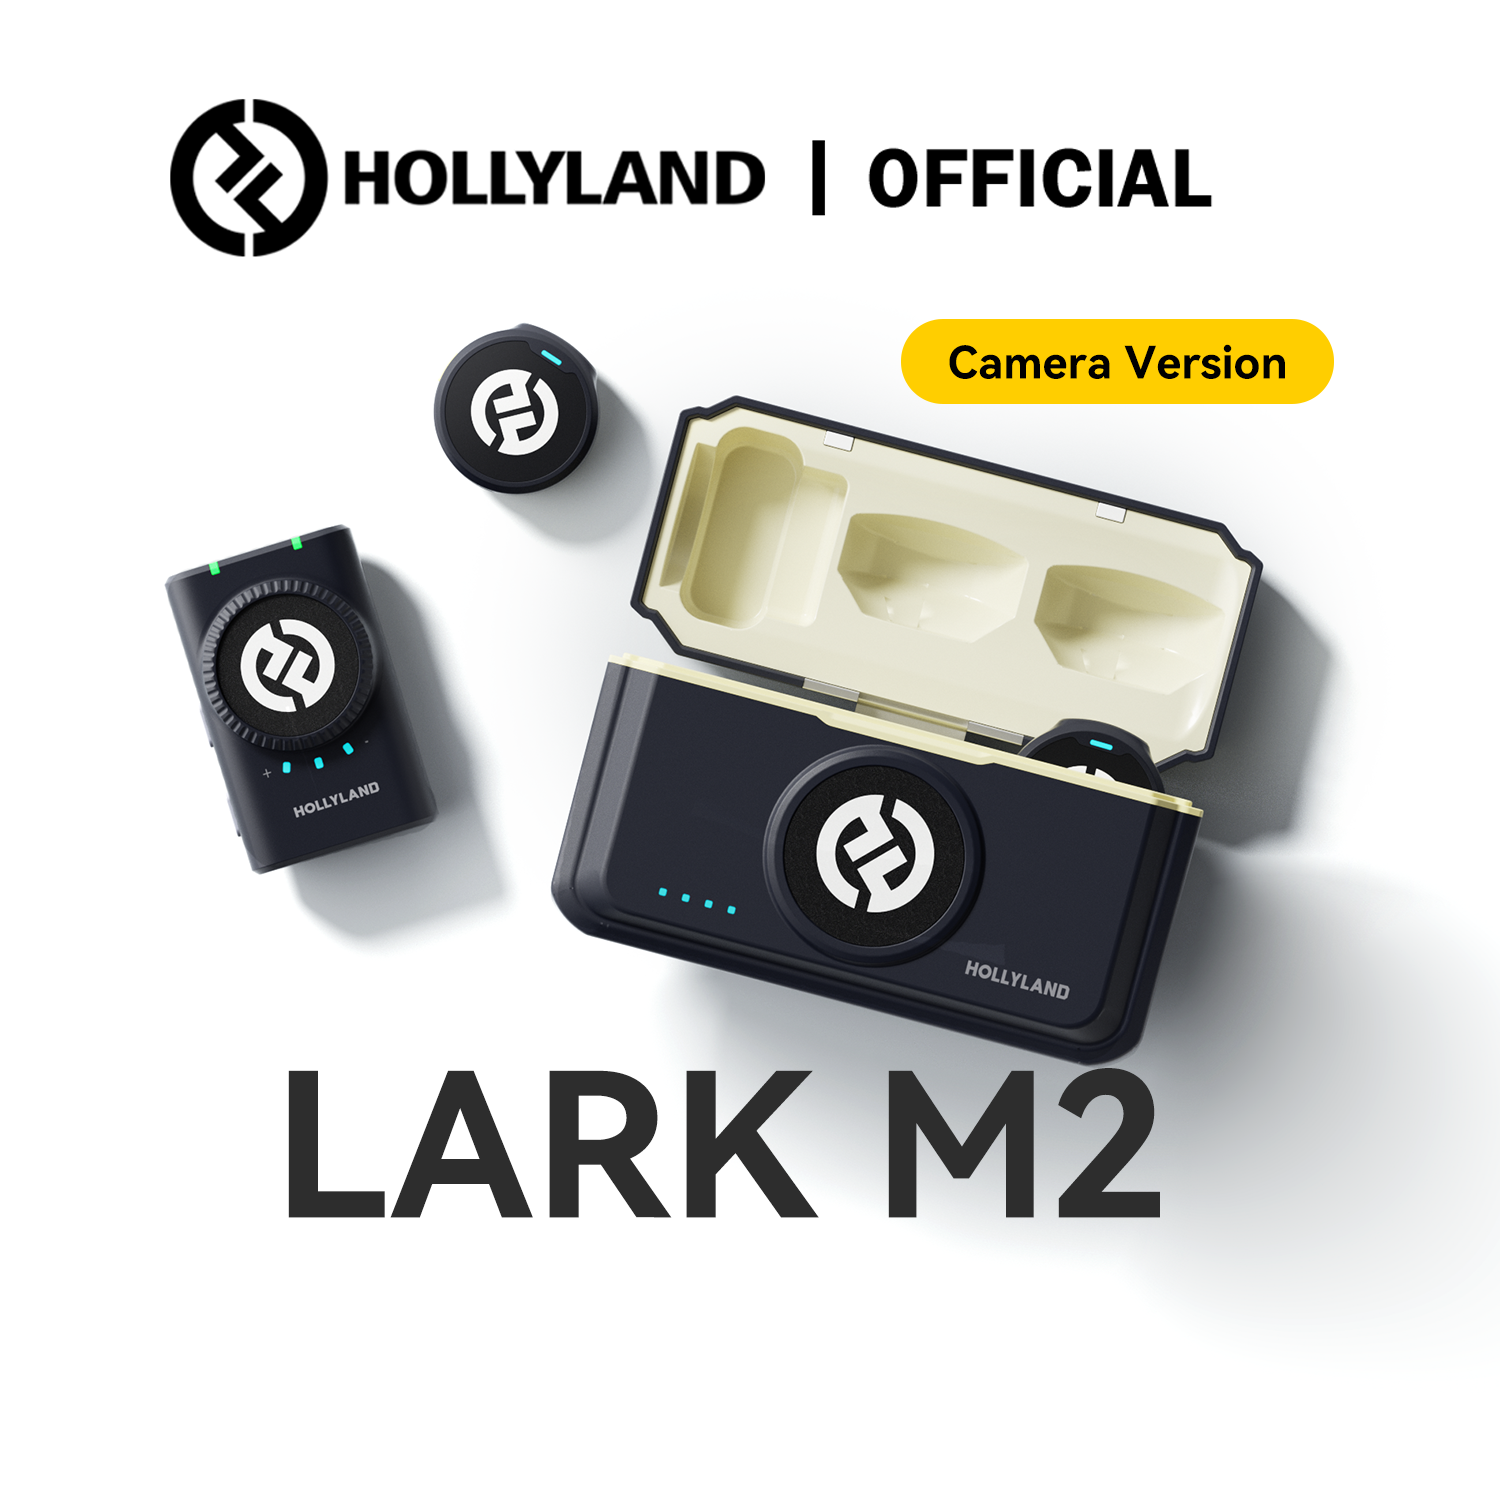 Hollyland LARK M2 Wireless Lavalier Microphone Camera Version 300m LOS  Range, Hi-Fi Audio, Smart Noise Cancellation, 40H Duration, Mini Microphone  for Livestreaming Vlogging